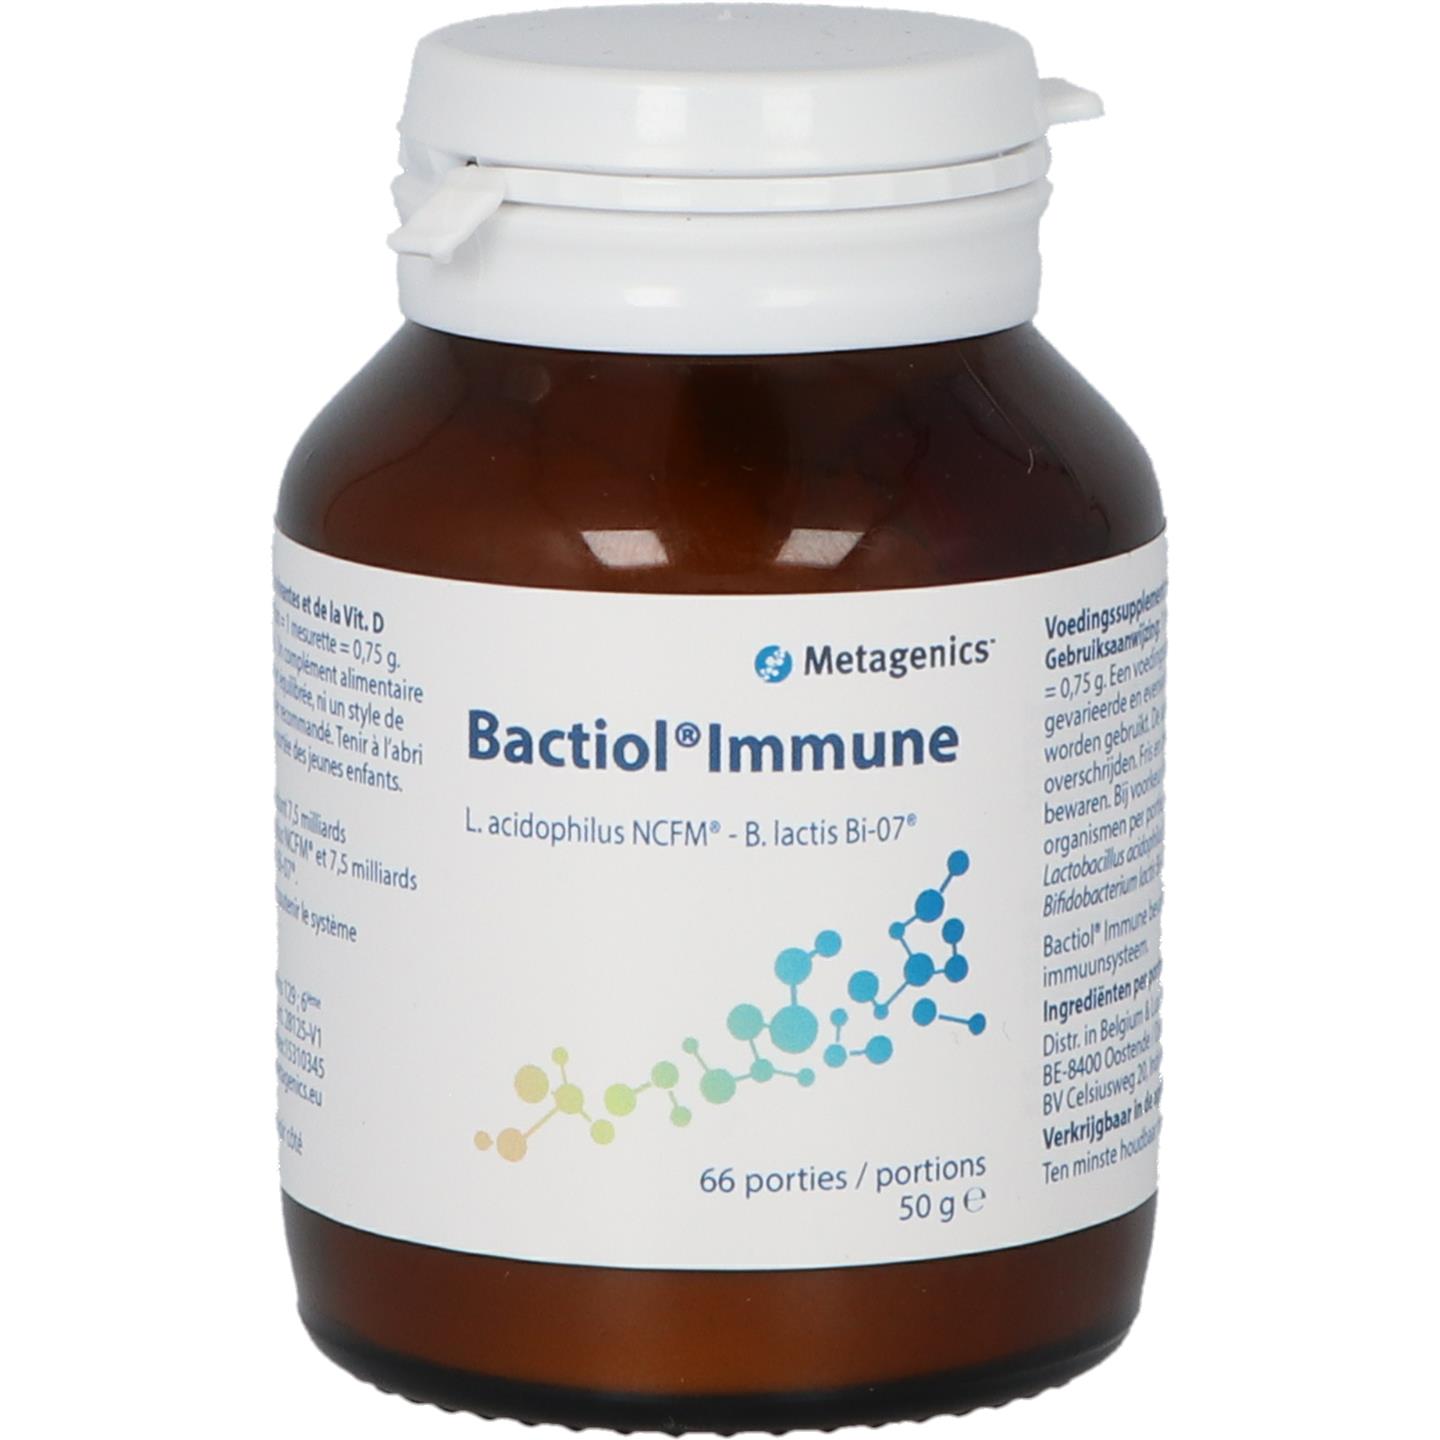 Bactiol Immune